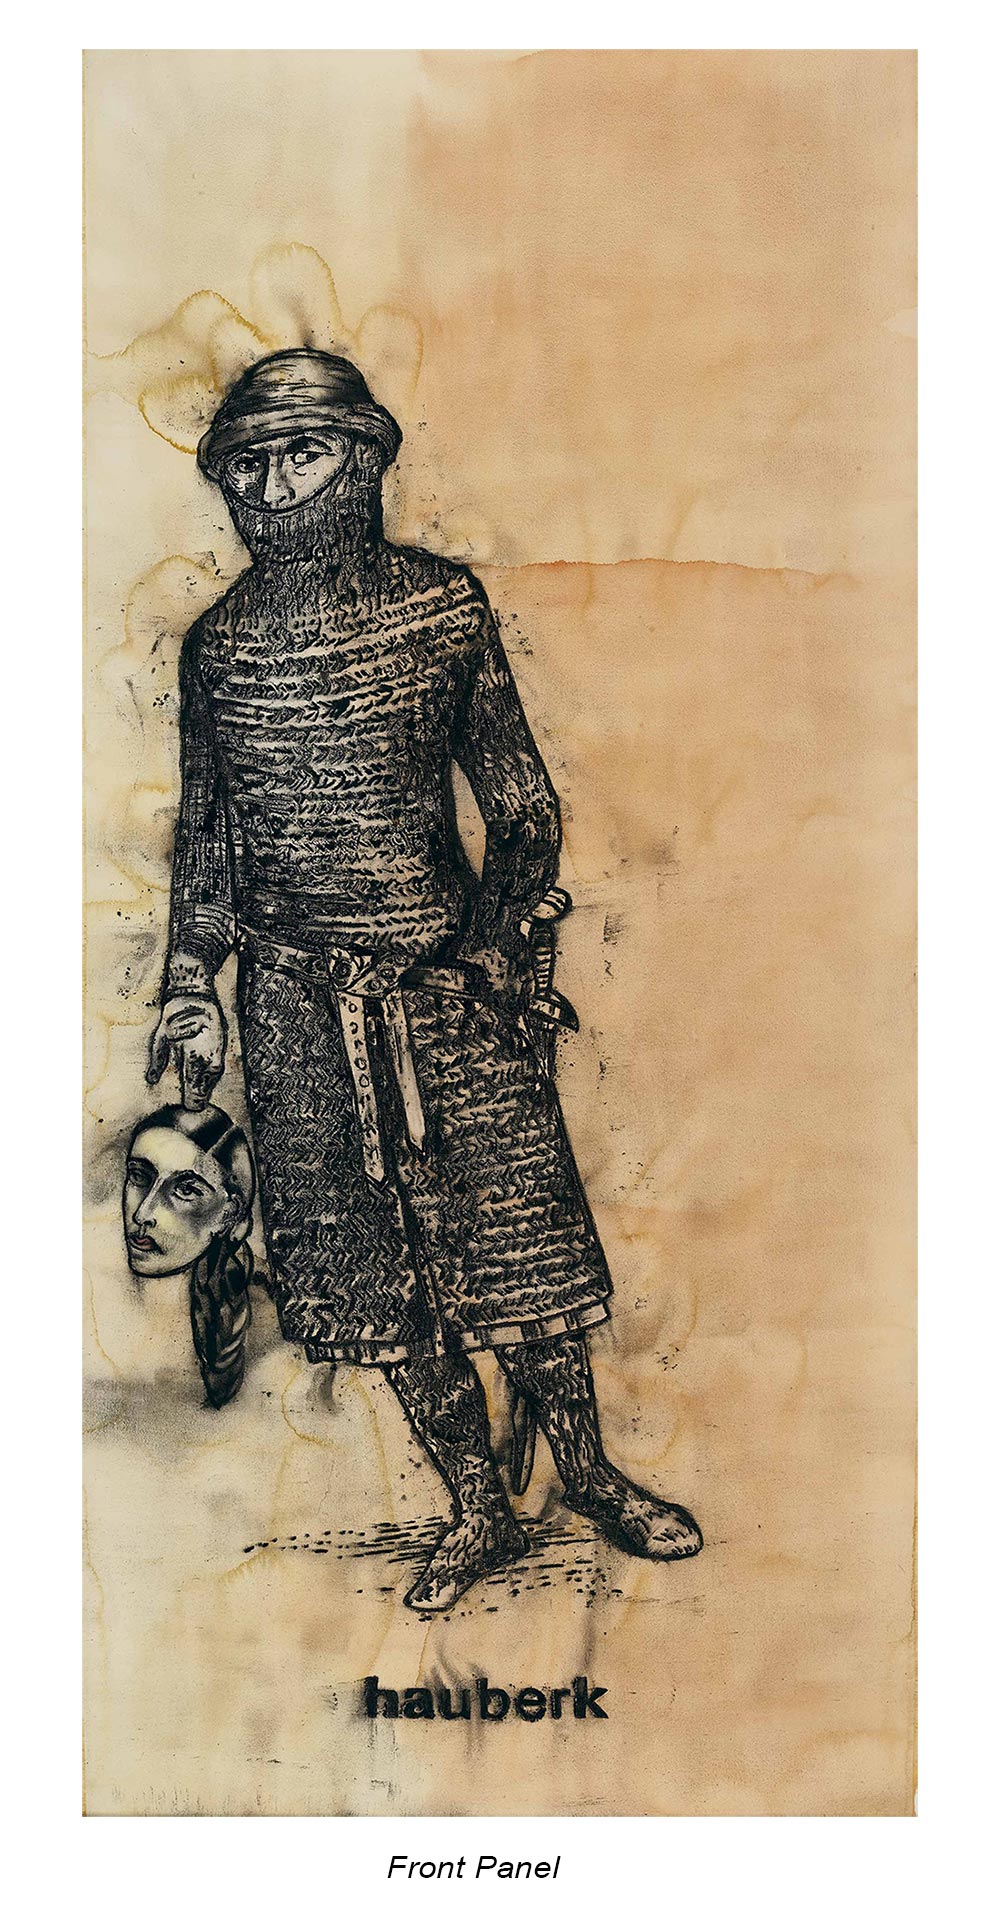 Lot 8 - Anju Dodiya, Hauberk (Double - Panelled Painting),  b) watercolour and charcoal on paper, 2007, Estimate - INR  10,00,000 - 15,00,000